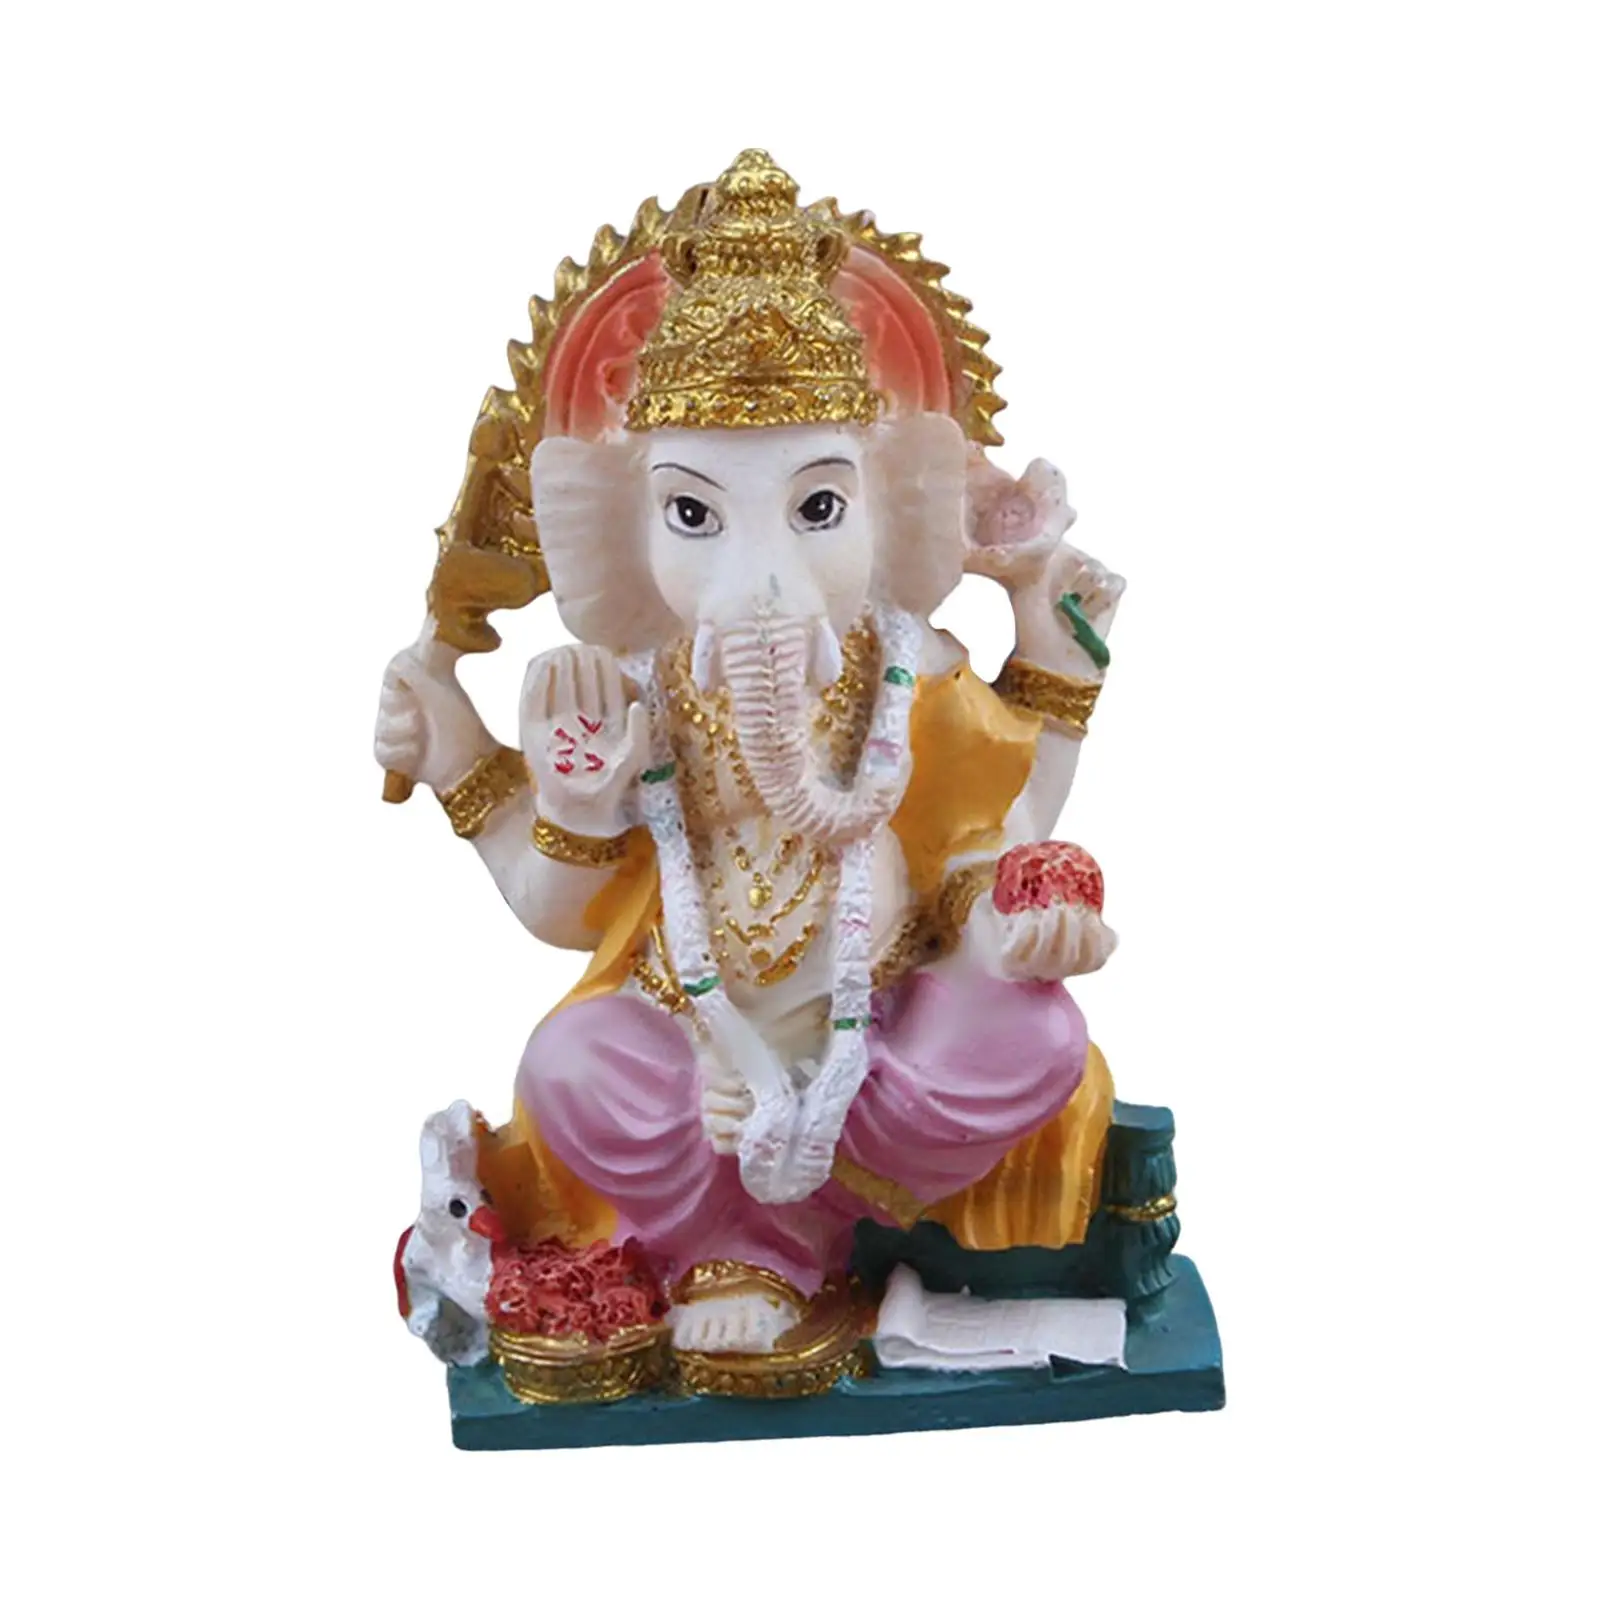 Mini Simulation Hindu Deity Statue Miniature Ornament Elephant Sculpture Resin Model for Desktop Living Room Shelf Decor